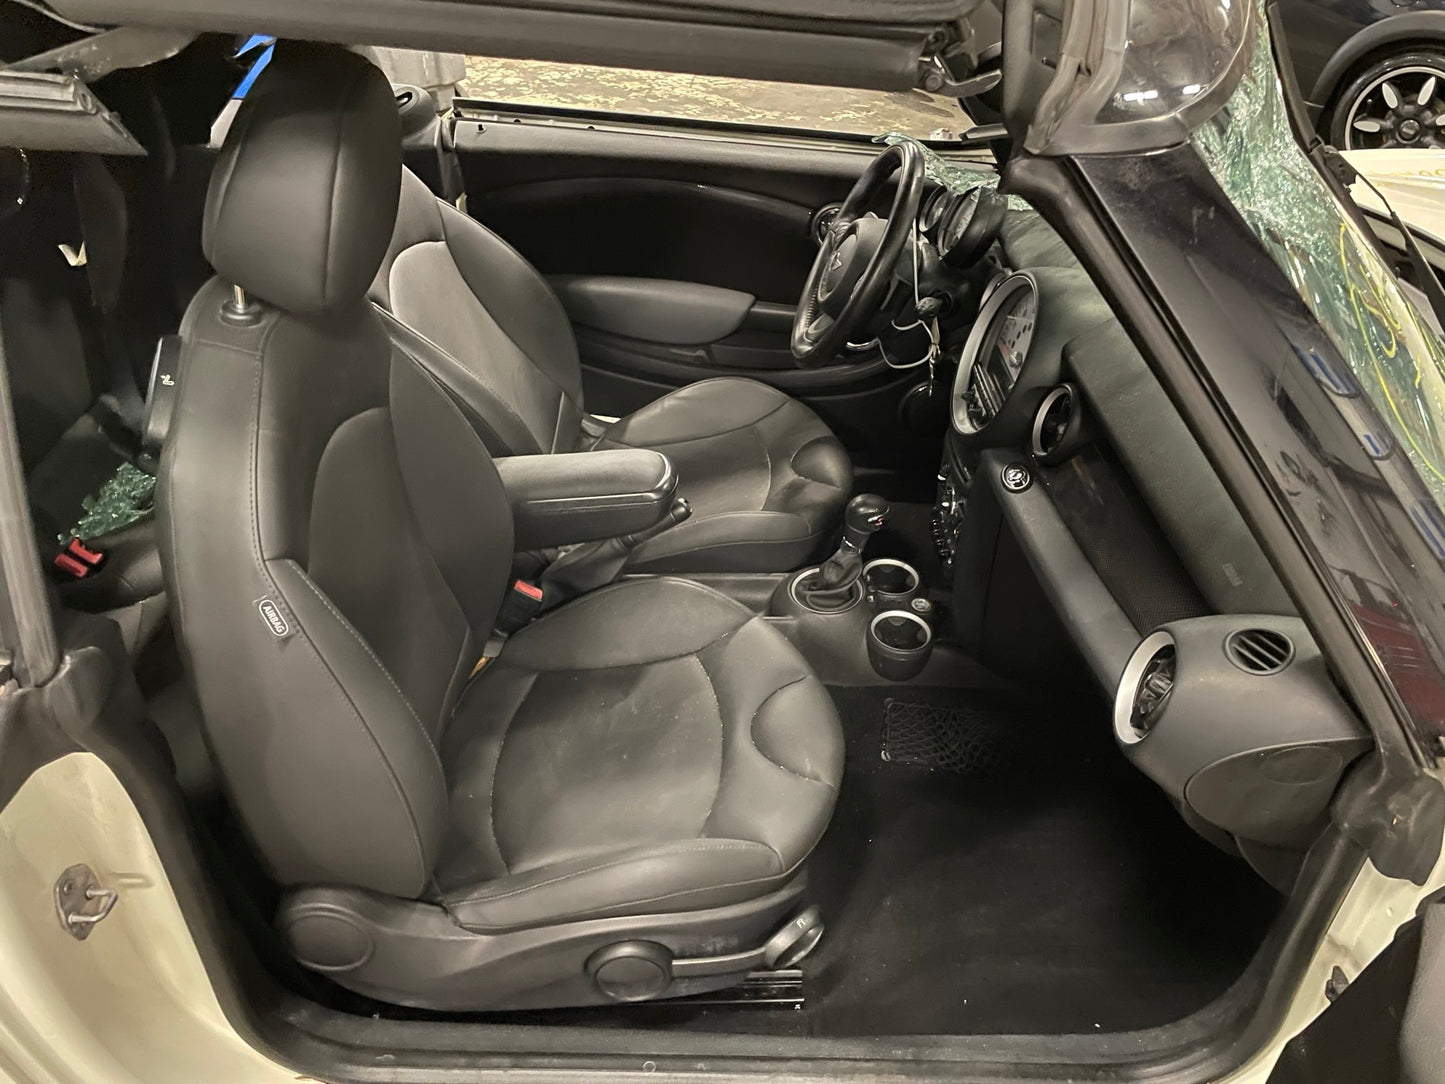 2011 MINI Cooper Convertible S, New Parts Car (January 2022) Stk #280